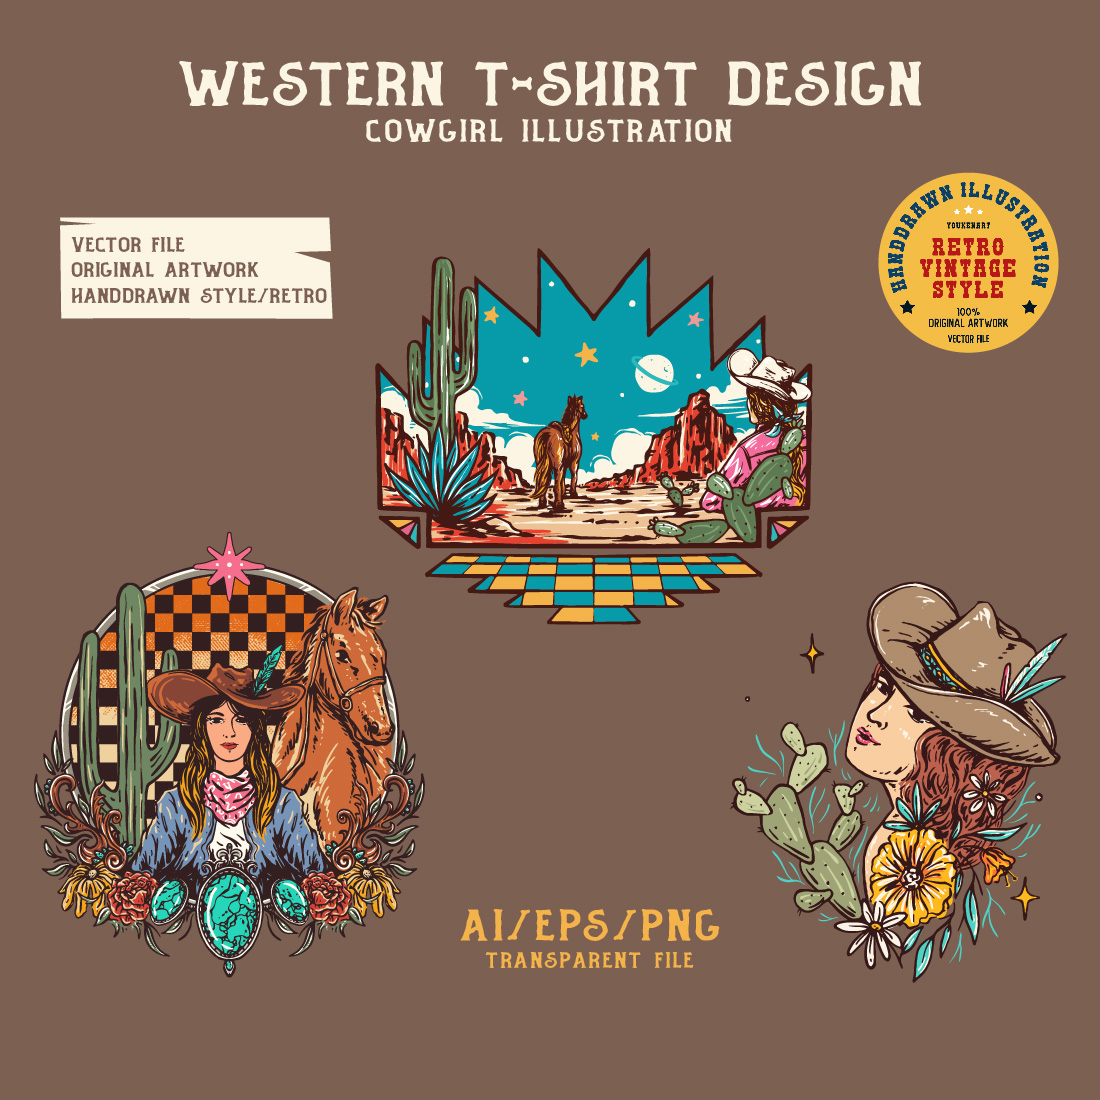 Western Cowgirl tshirt design vintage illustration cover image.